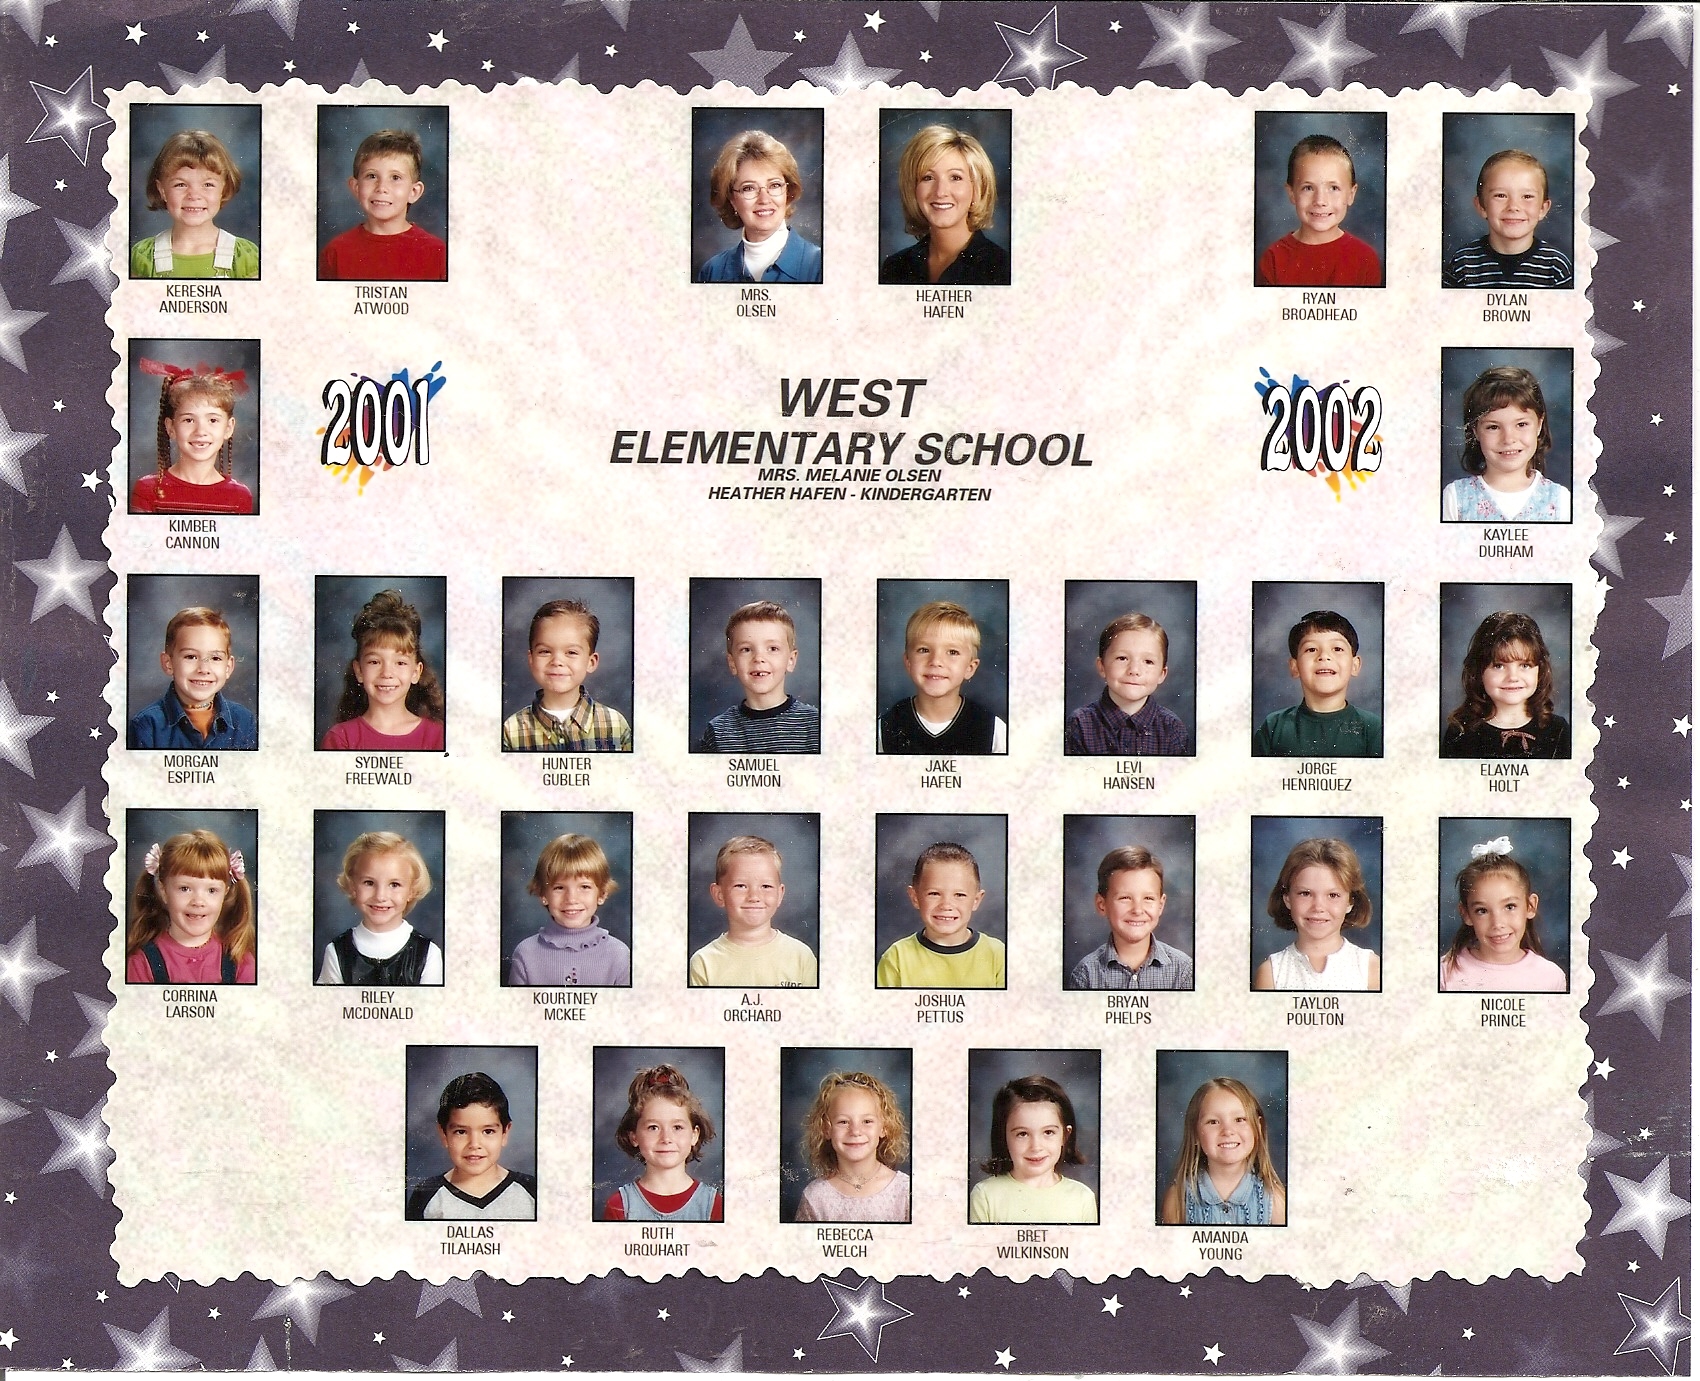 Mrs. Heather Hafen's 2001-2002 kindergarten class at West Elementary School